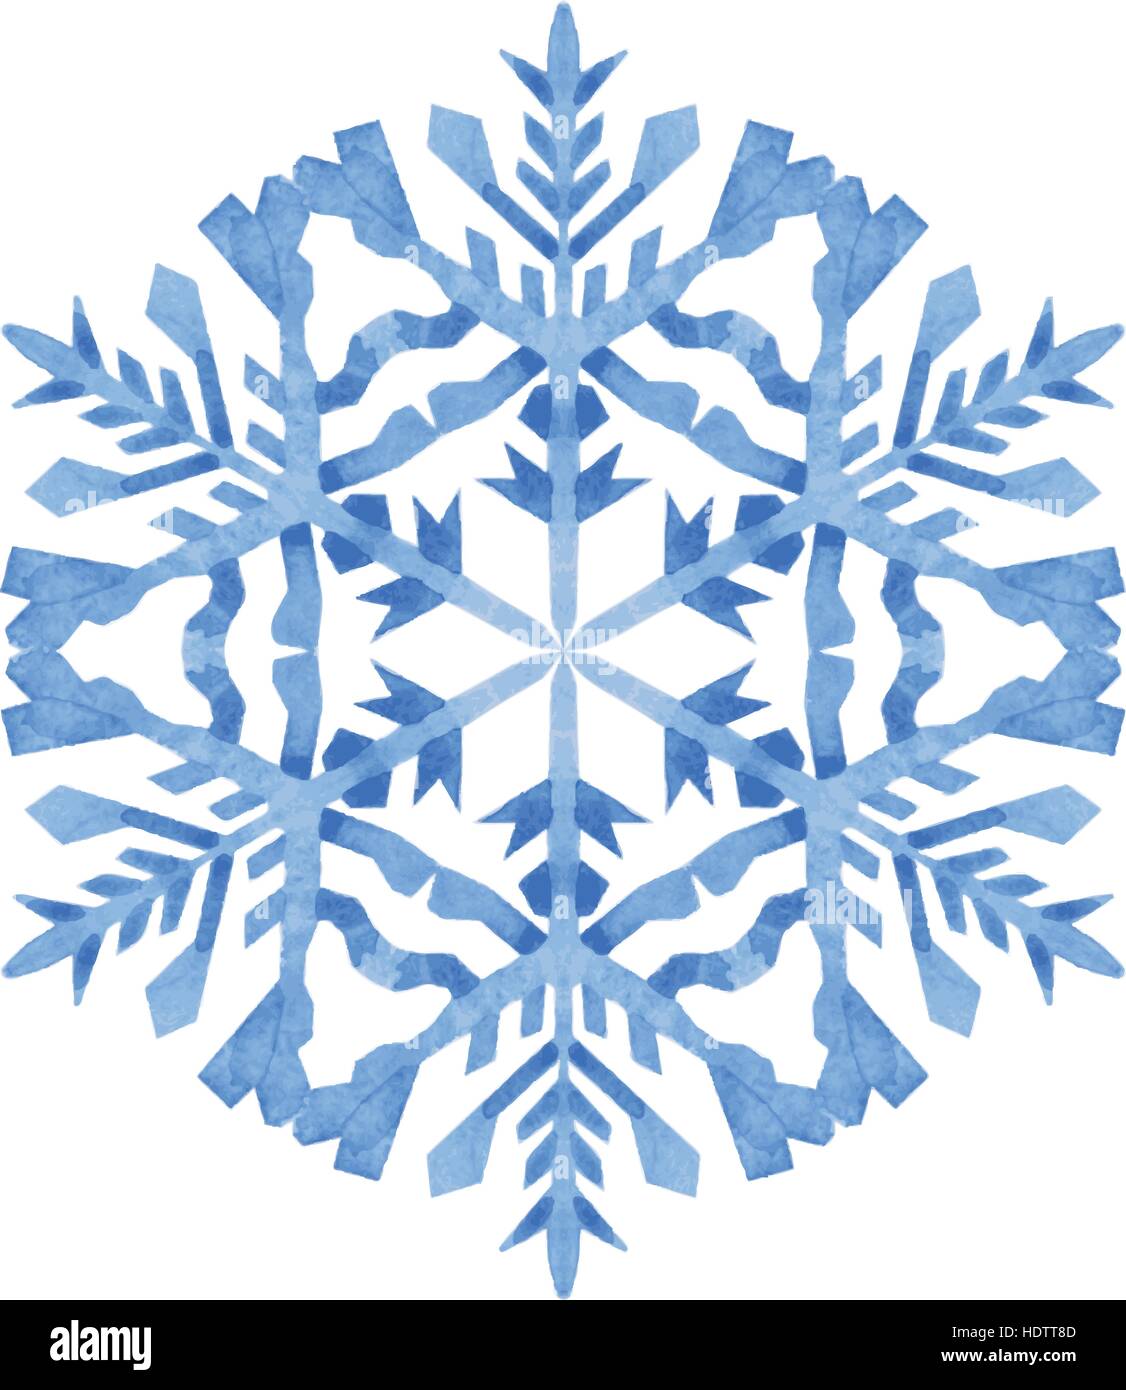 Free Set Of Hand Drawn Snowflakes Vector - TitanUI